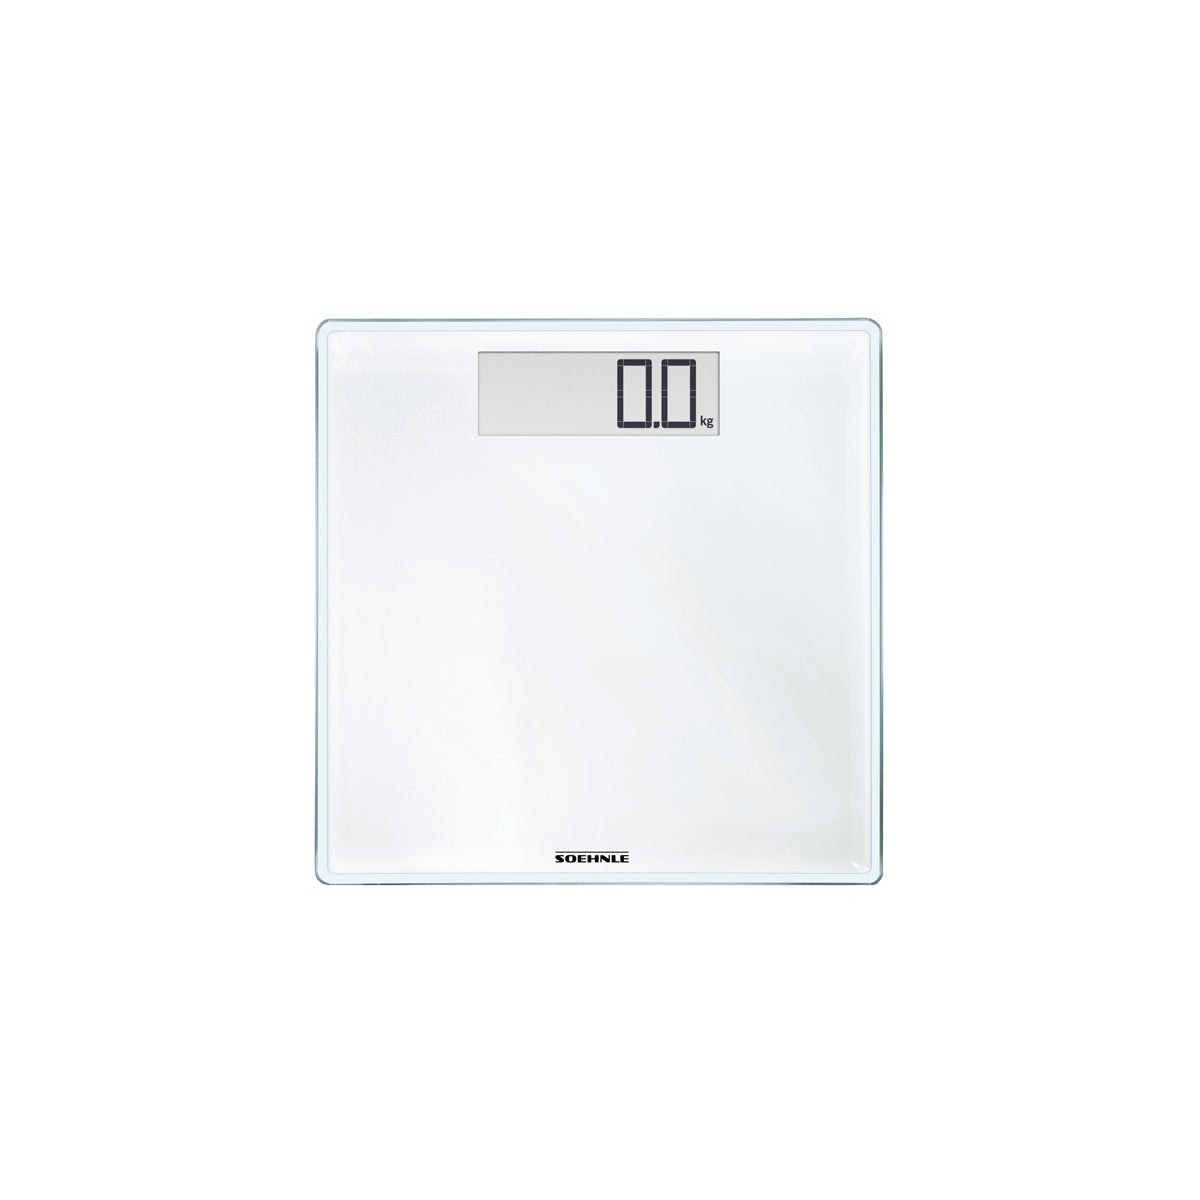 S63853 Soehnle Style Sense Comfort 100 White Bathroom Scale 180kg Tomkin Australia Hospitality Supplies